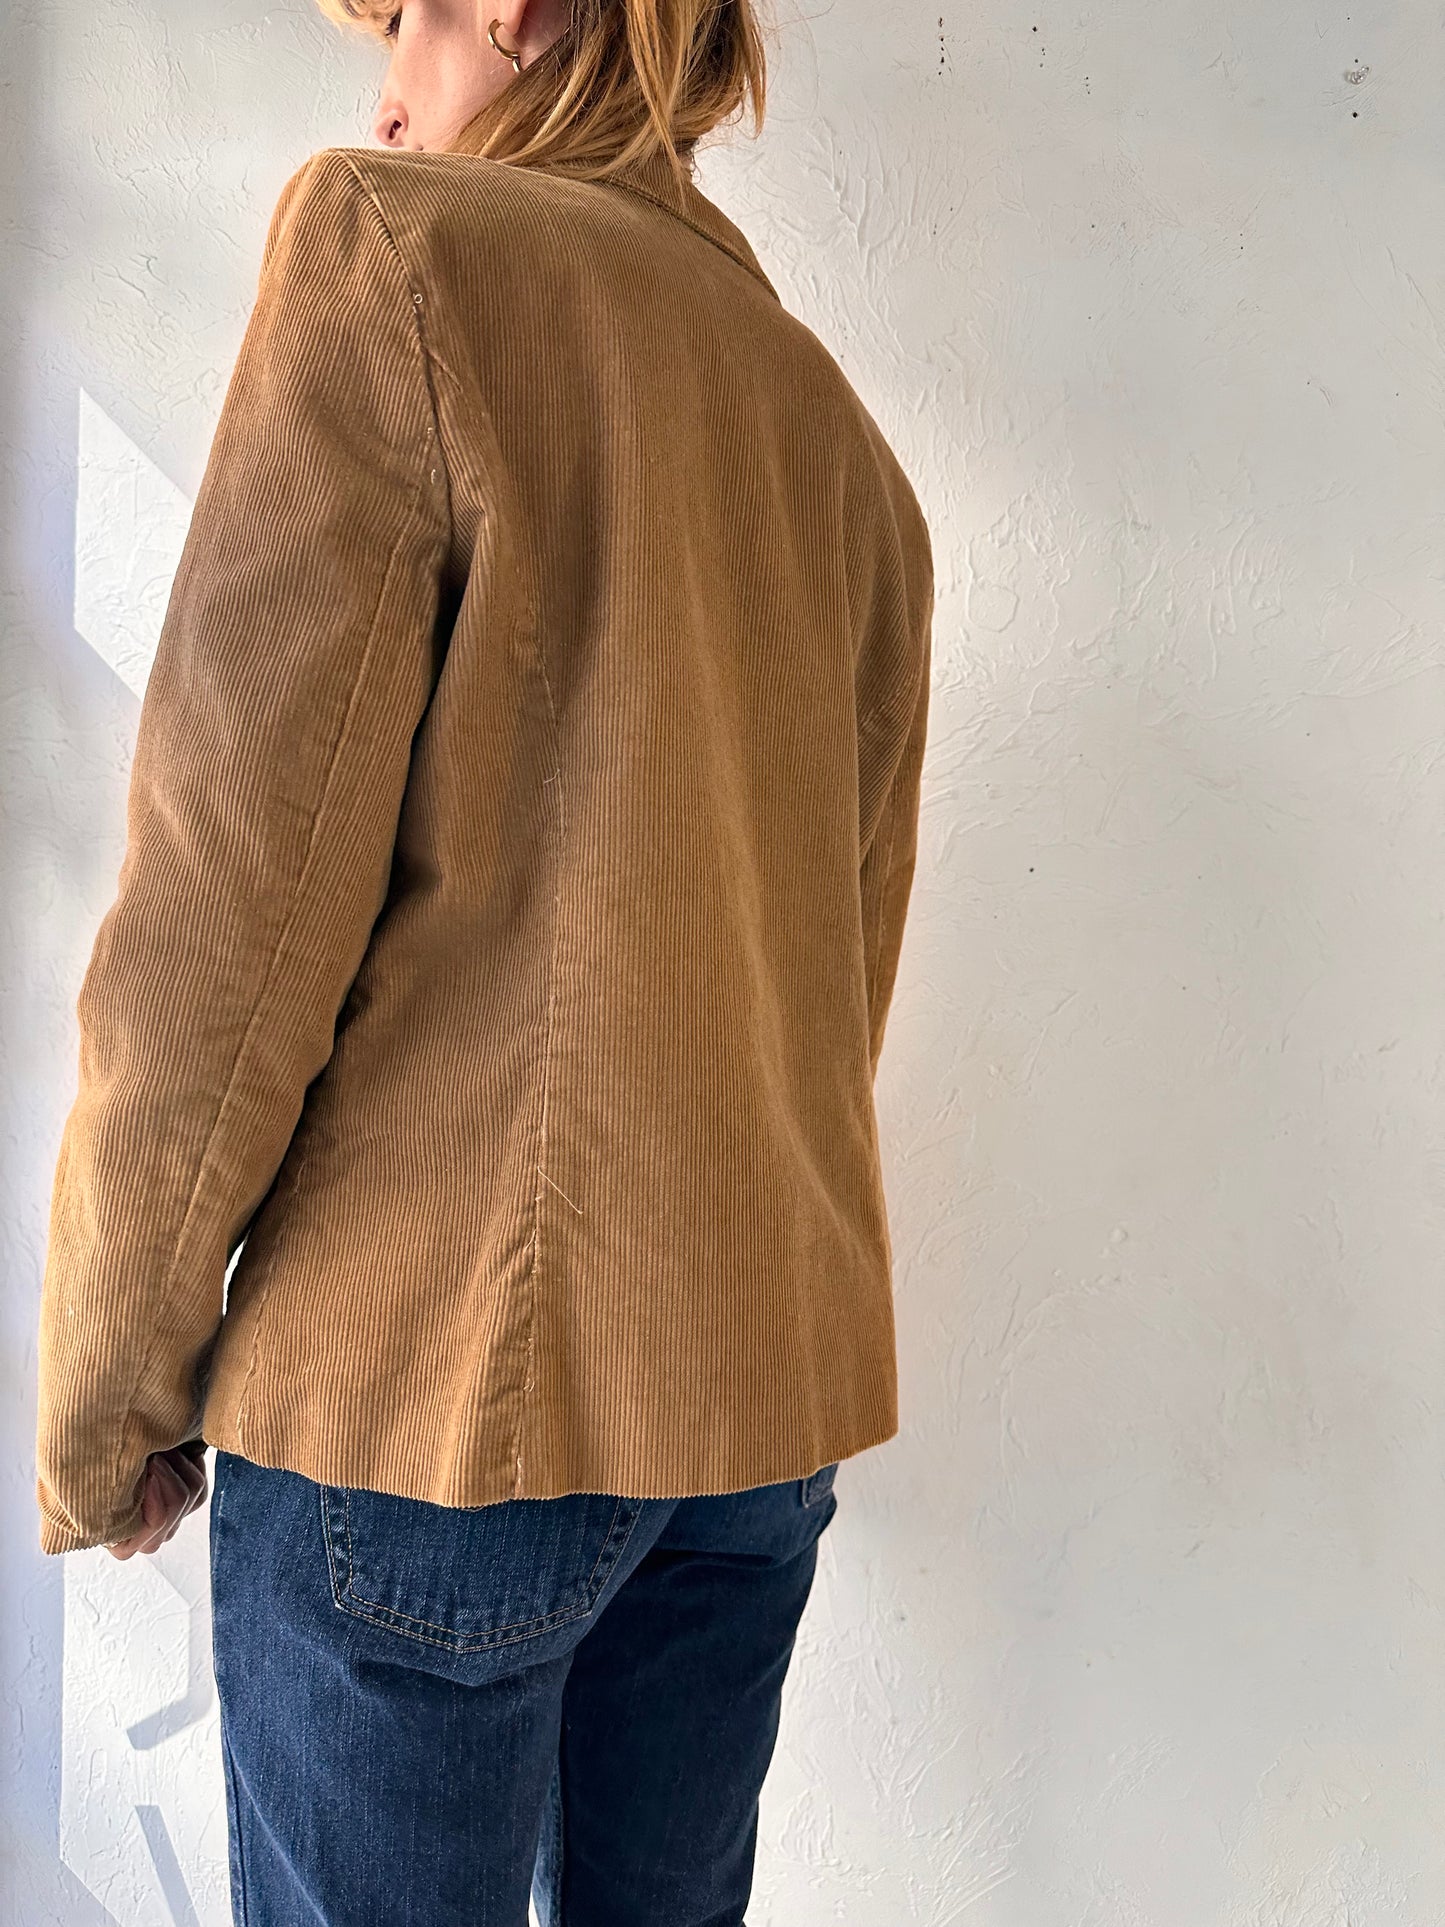 90s Tan Corduroy Blazer Jacket / Large